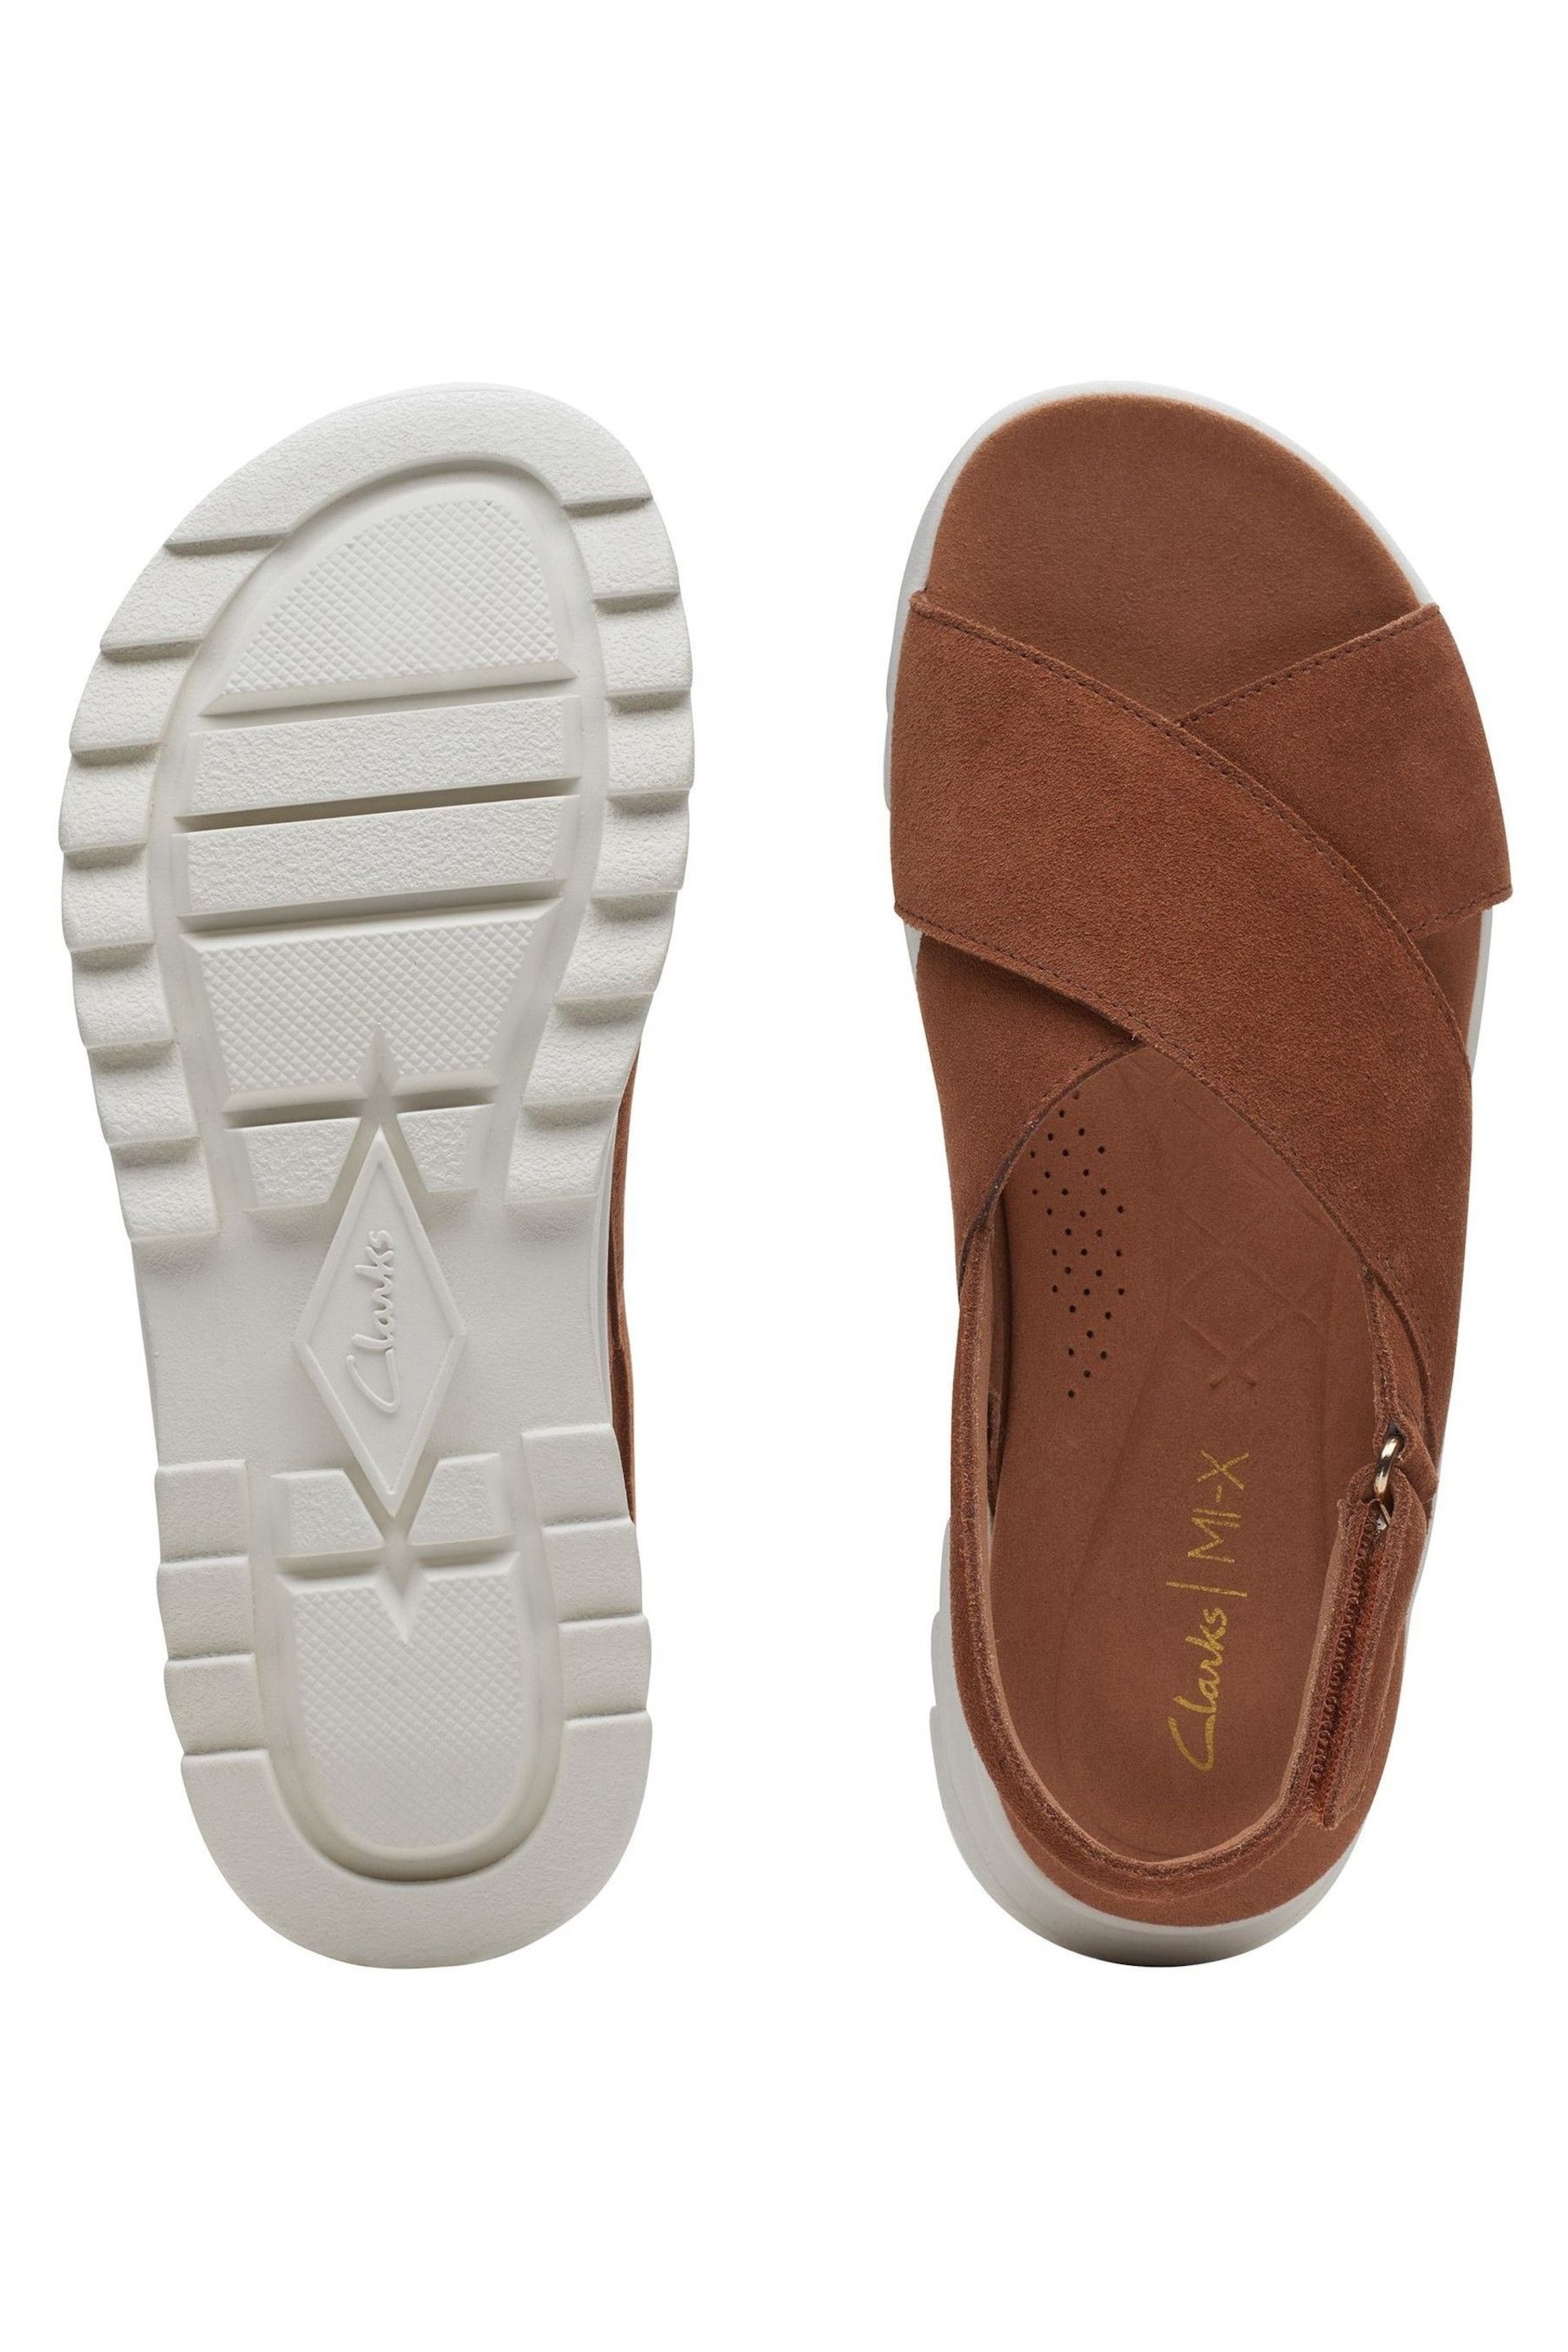 Clarks Brown Dash Lite Wish Sandals - Image 7 of 7